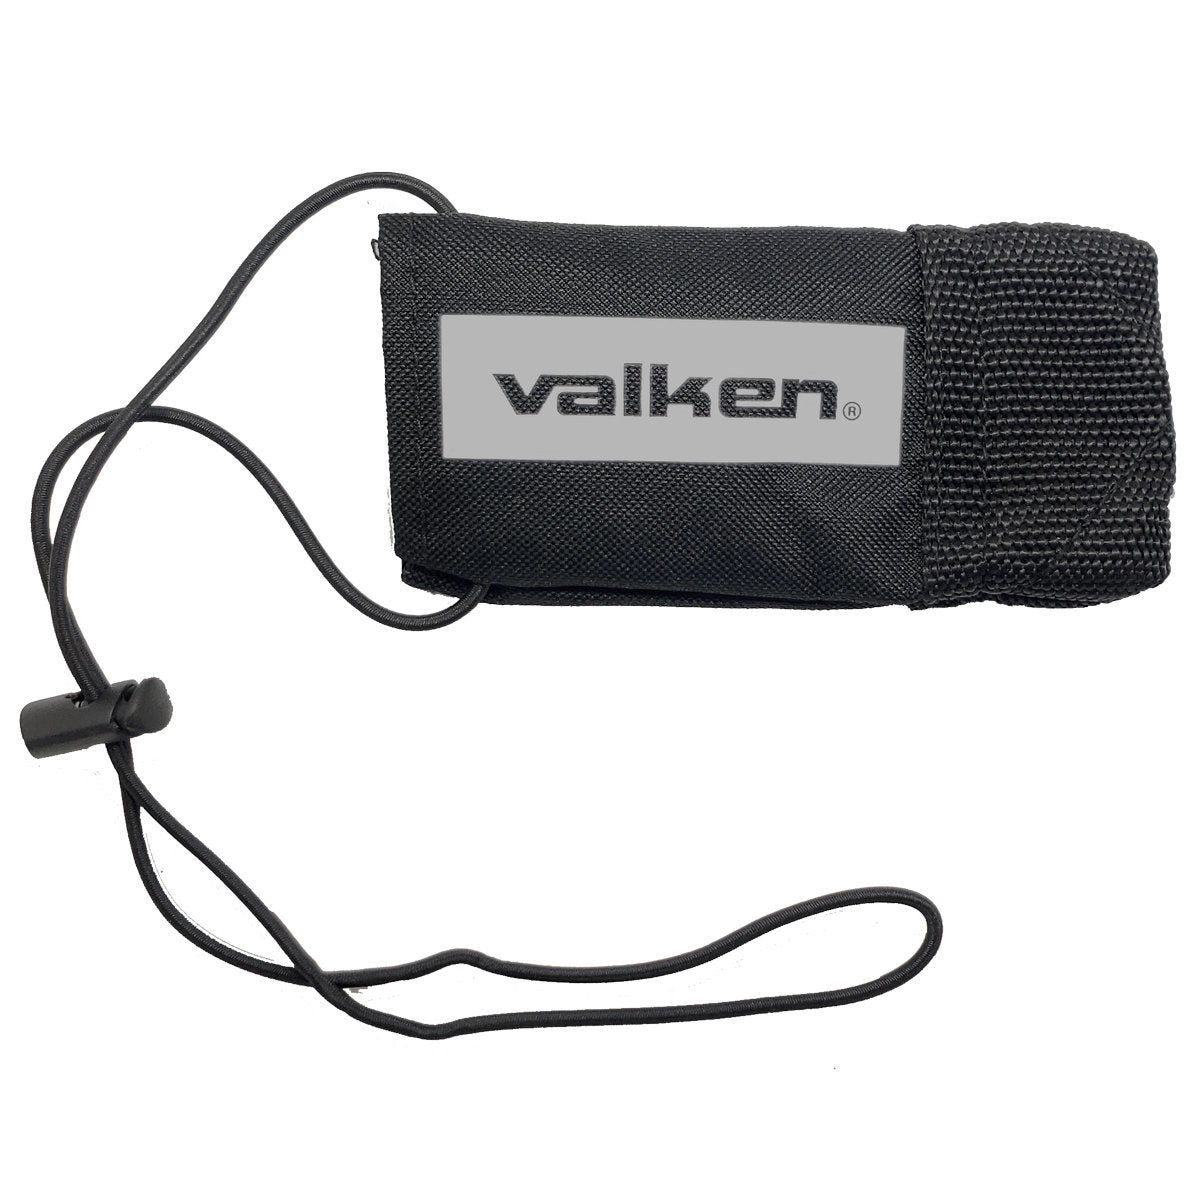 Valken TRG BLK Player Package